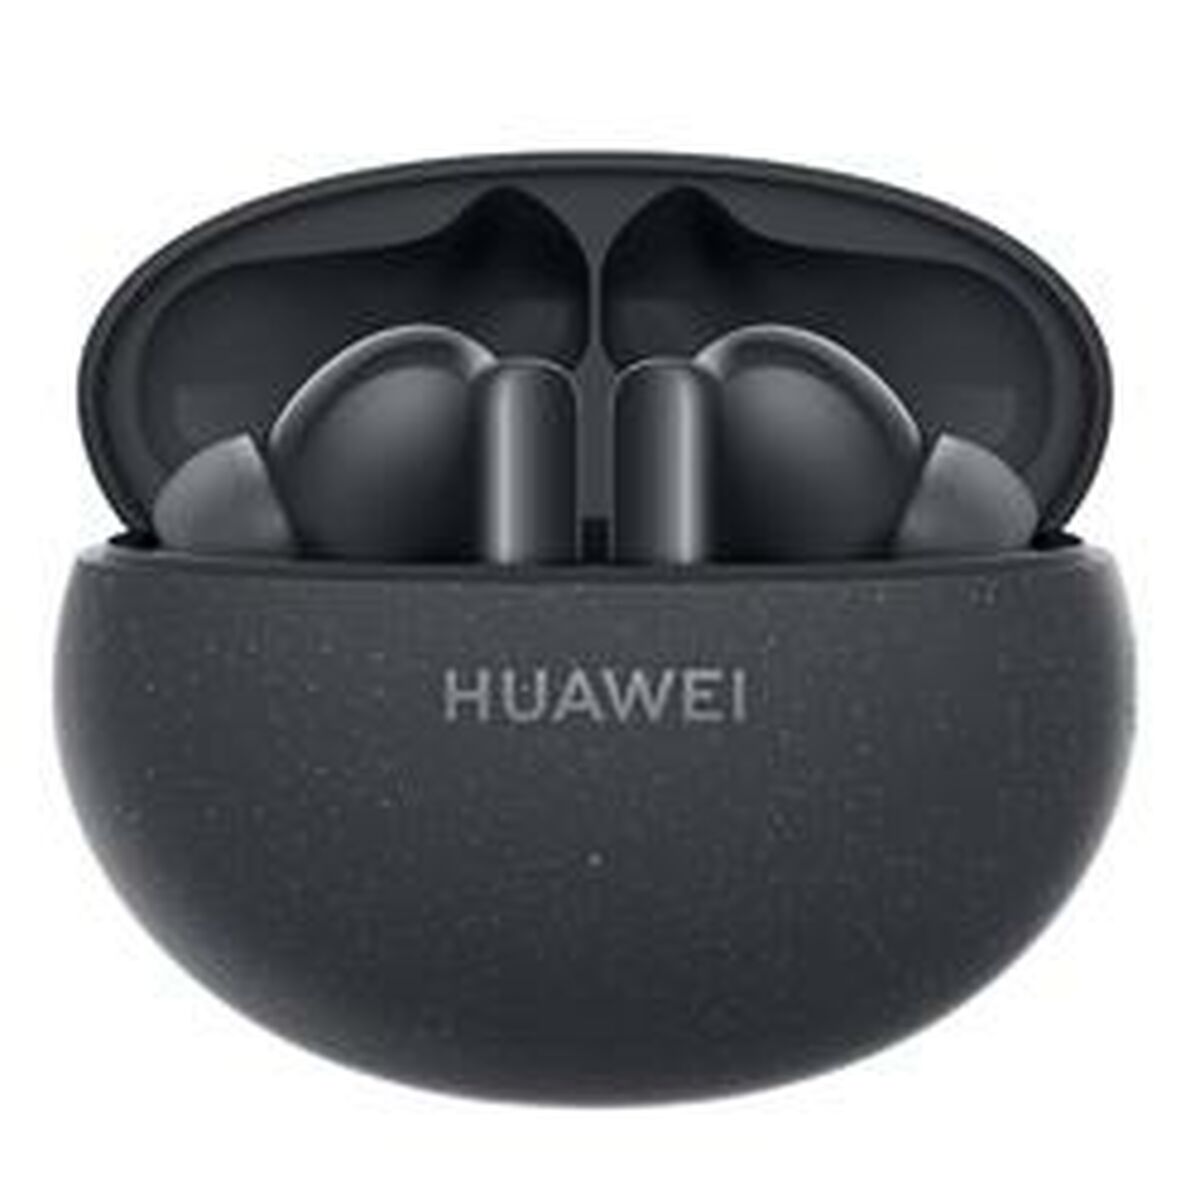 Drahtlose Kopfhörer Huawei 55036653 Schwarz - CA International  